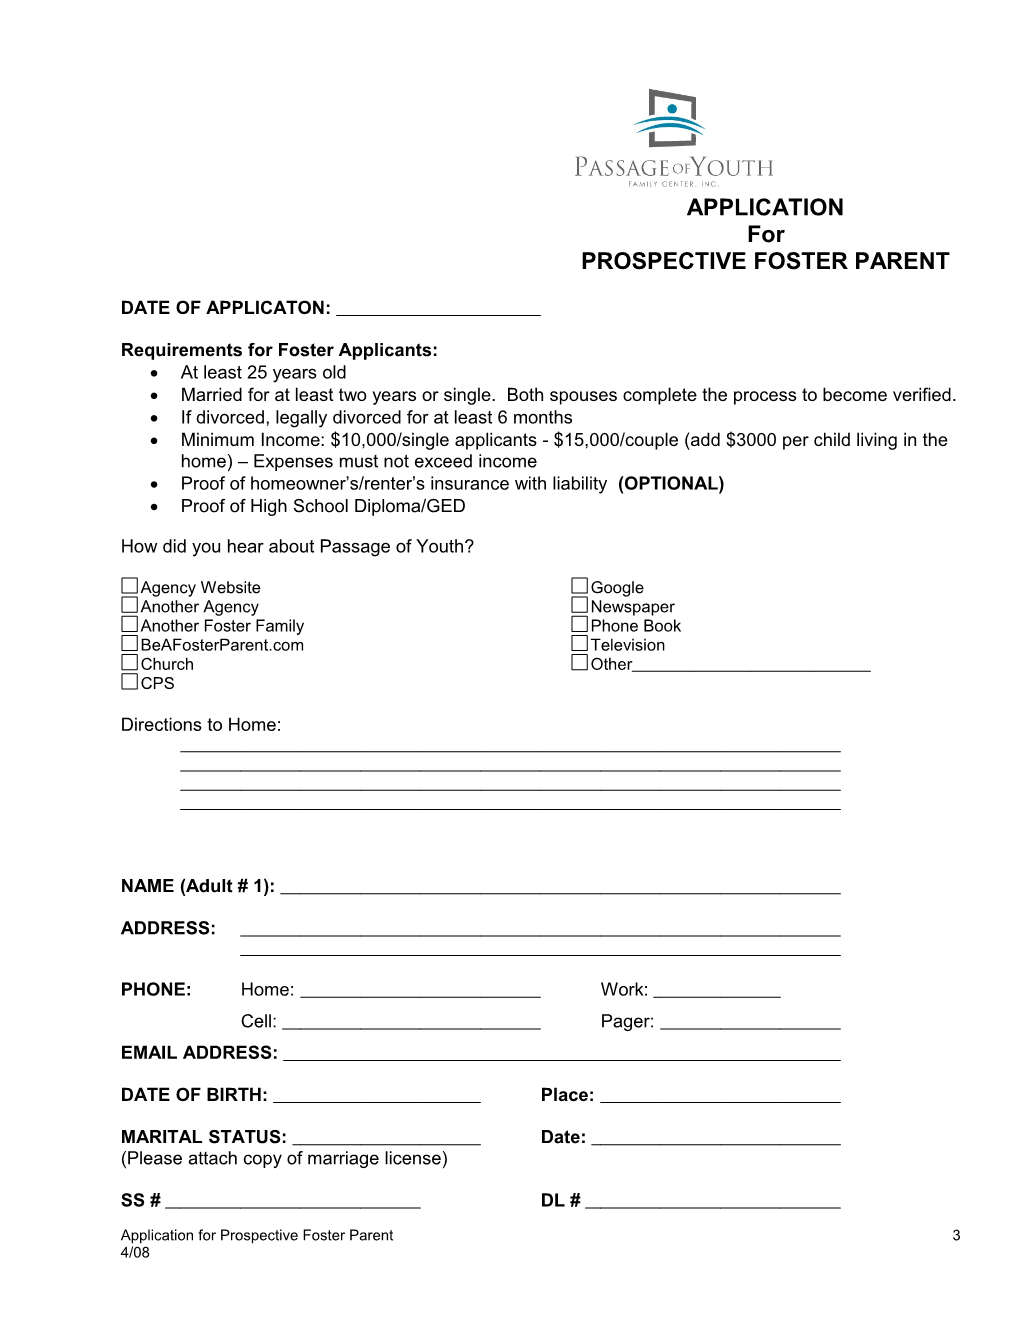 Application for Prospective FP